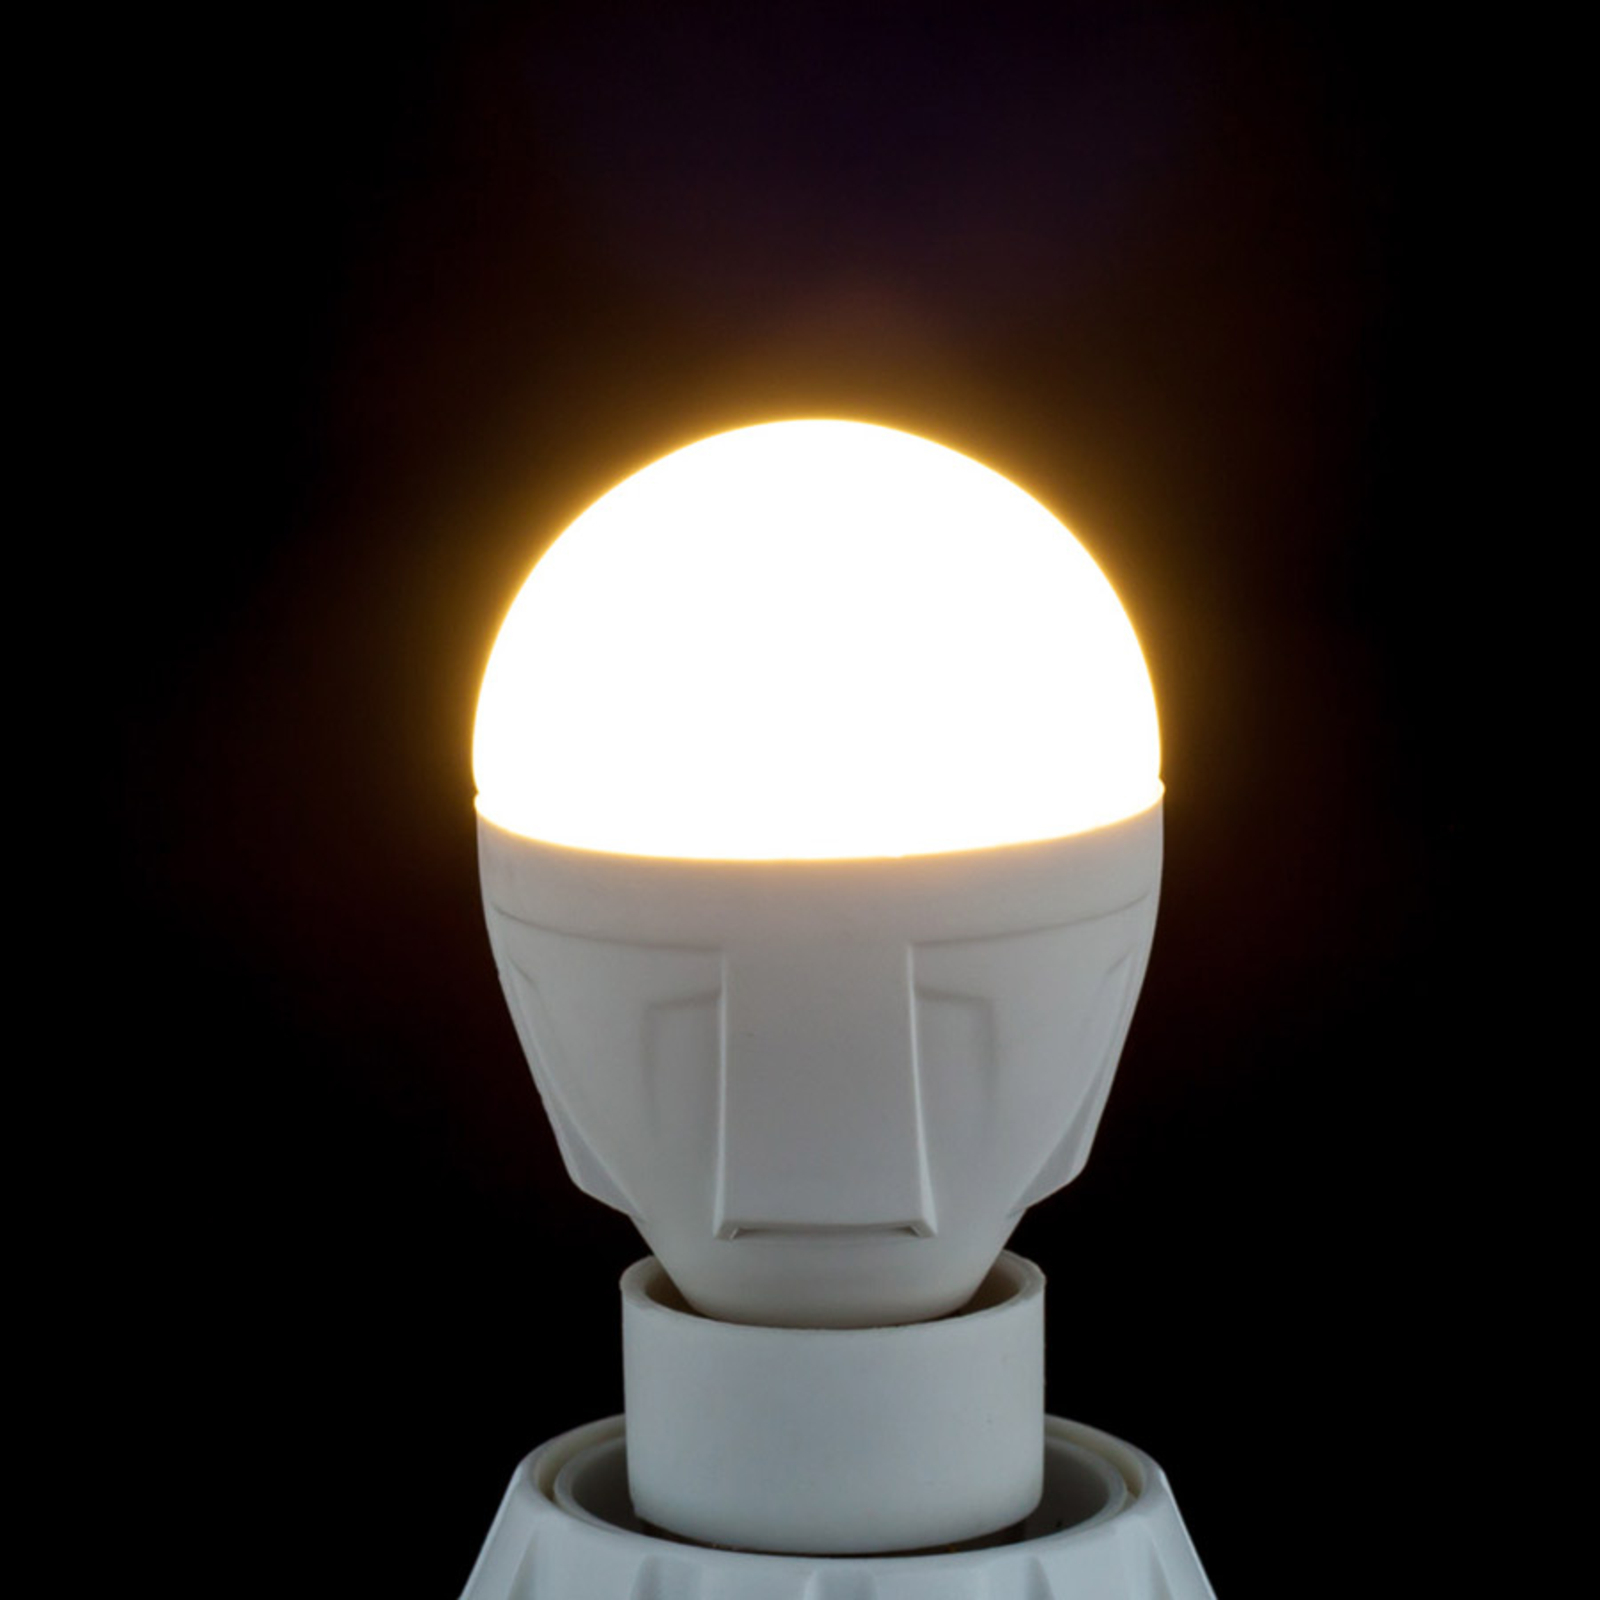 E14 4,9W 830 bombilla LED forma gota blanco cálido